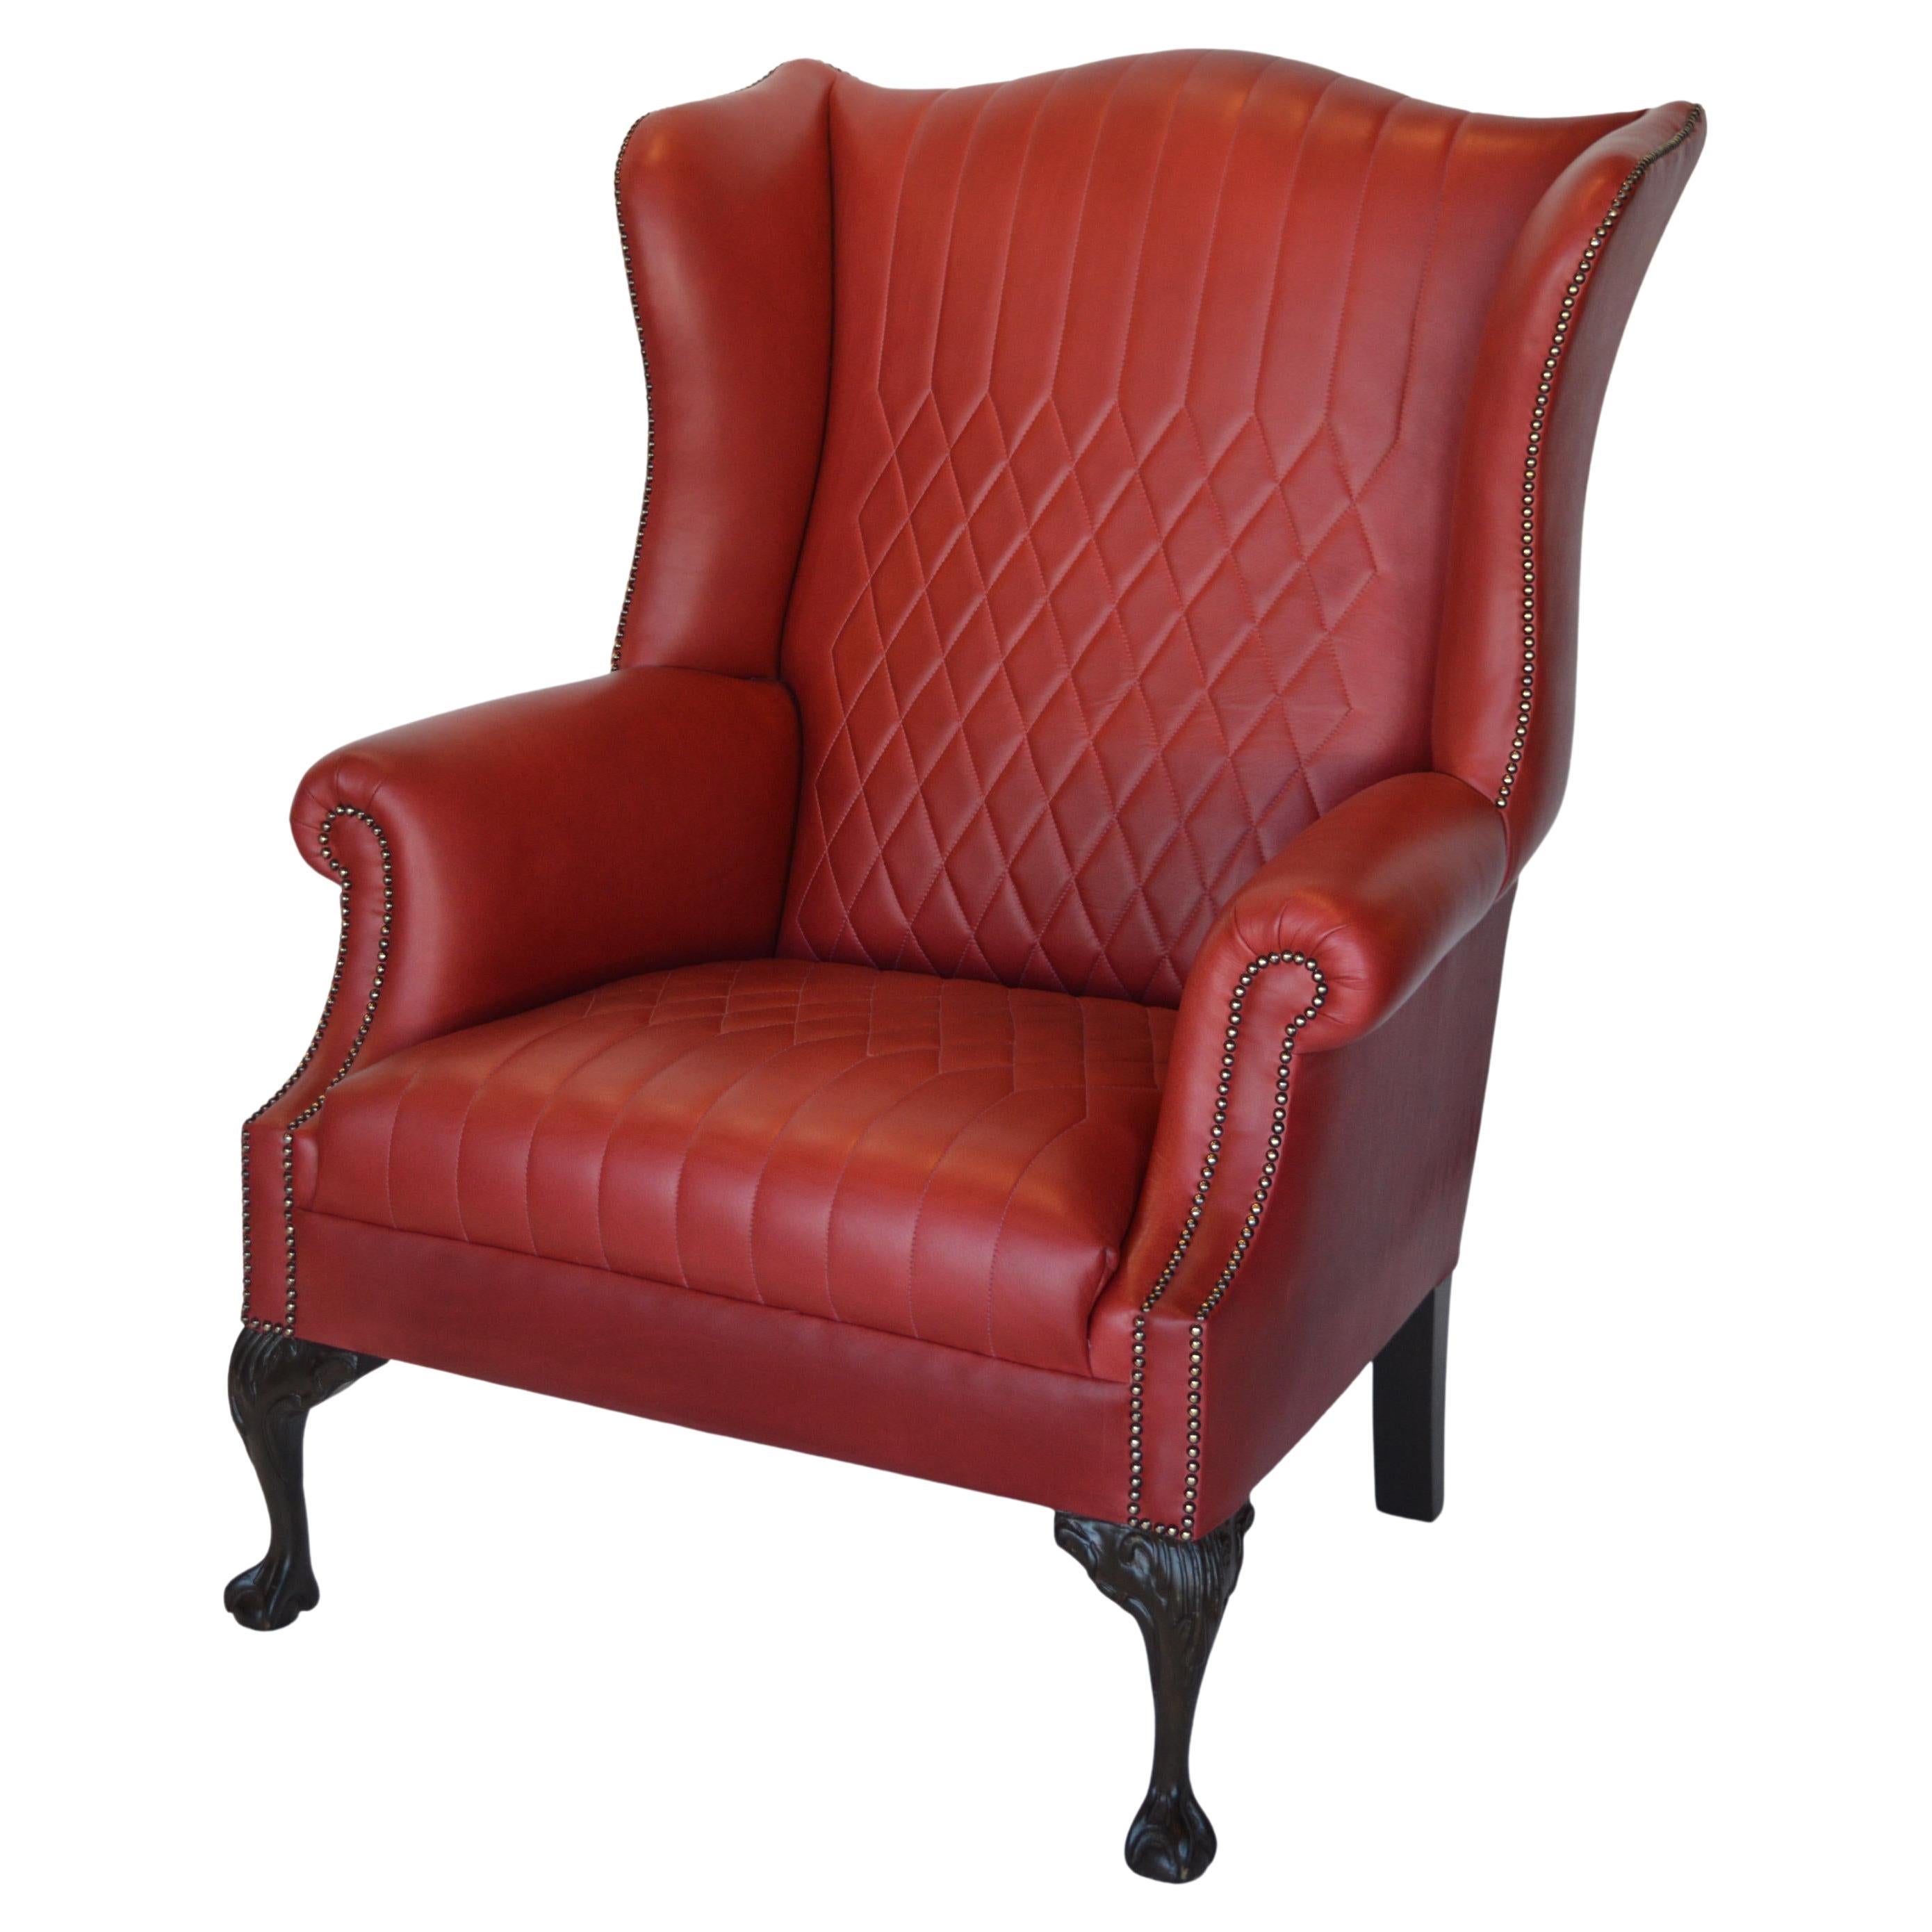 Fin du XIXe siècle, chaise anglaise en cuir Wingback